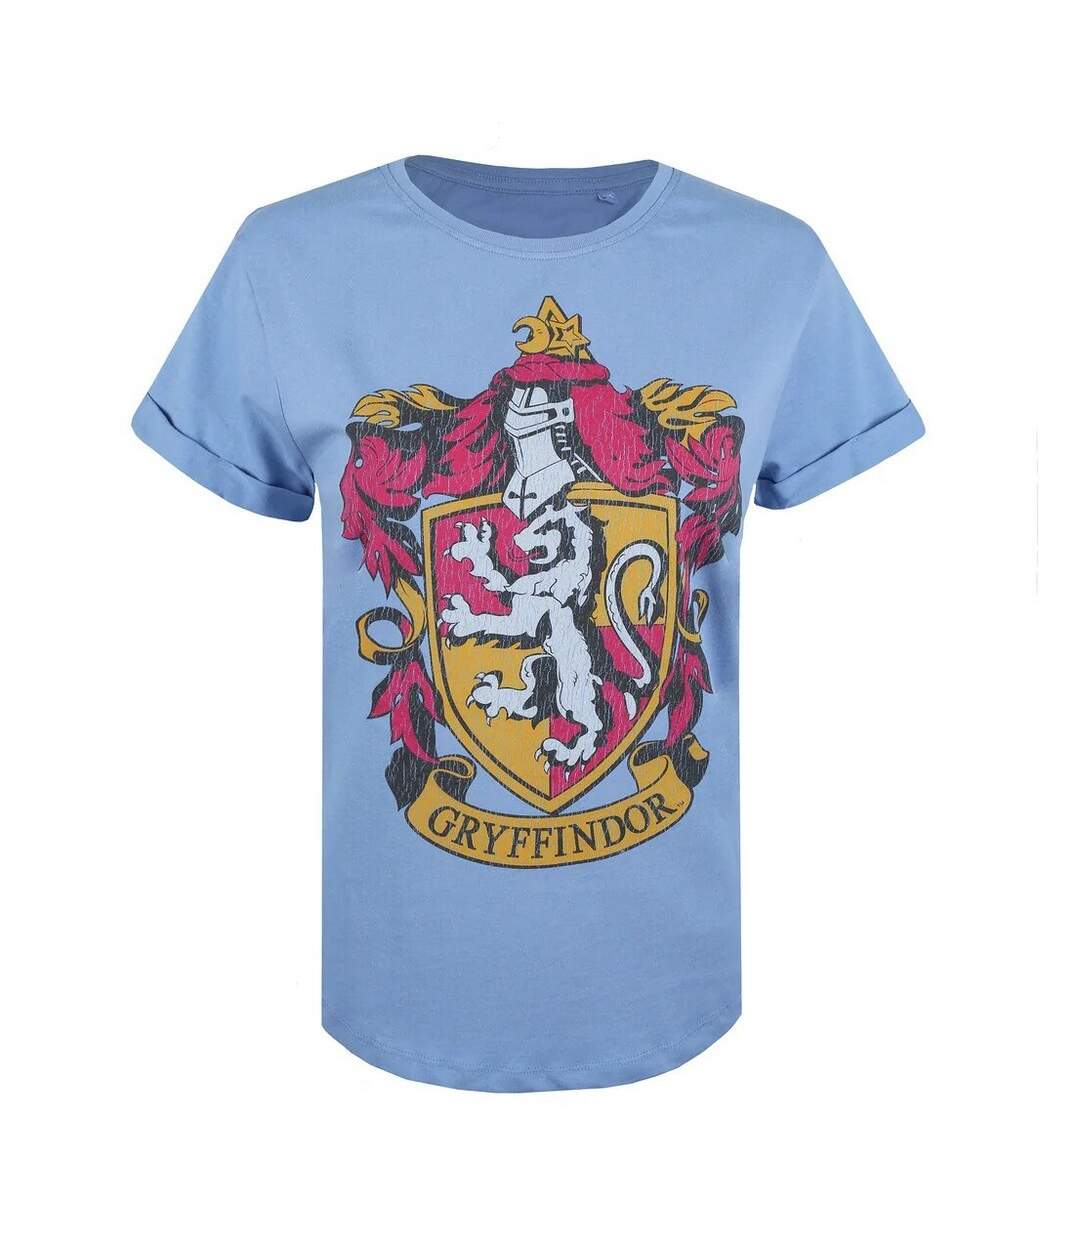 Harry Potter - T-shirt - Femme (Indigo) - UTTV324